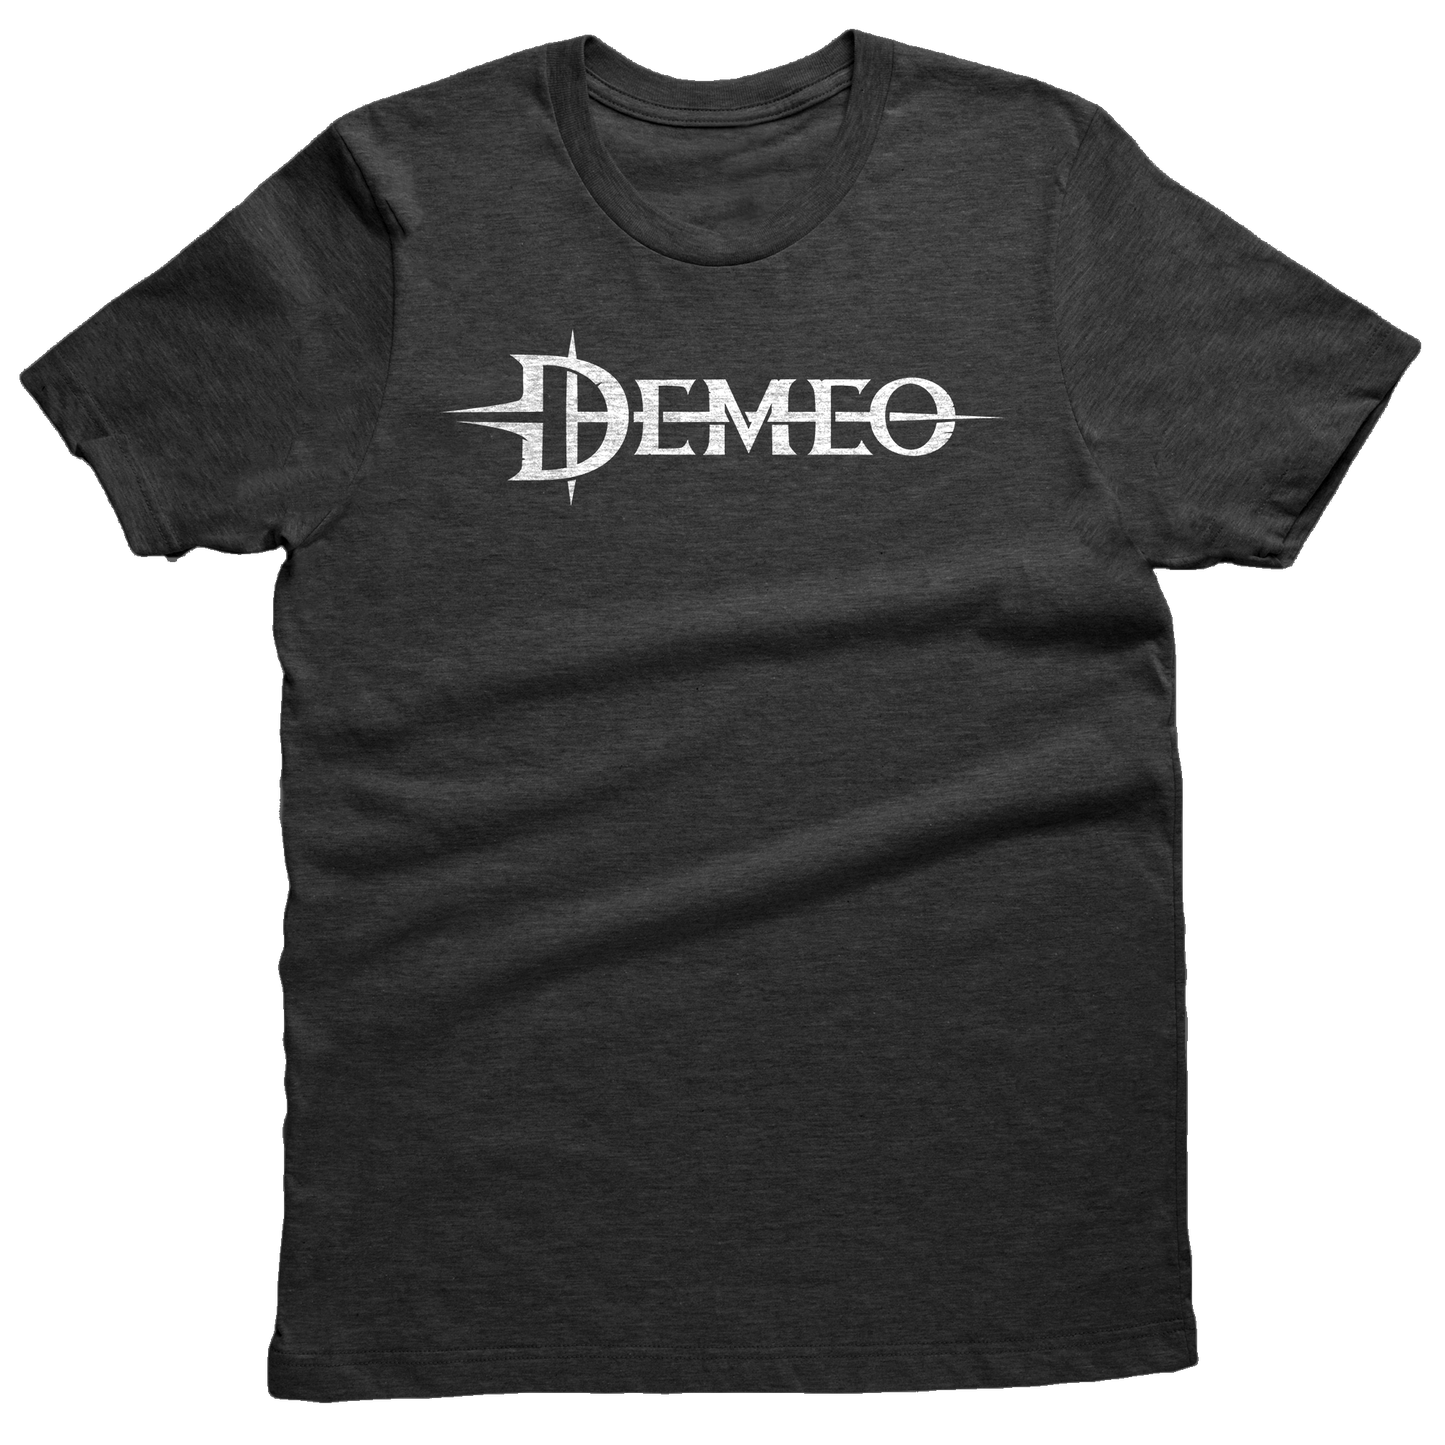 Demeo Logo Tee - White/Graphite